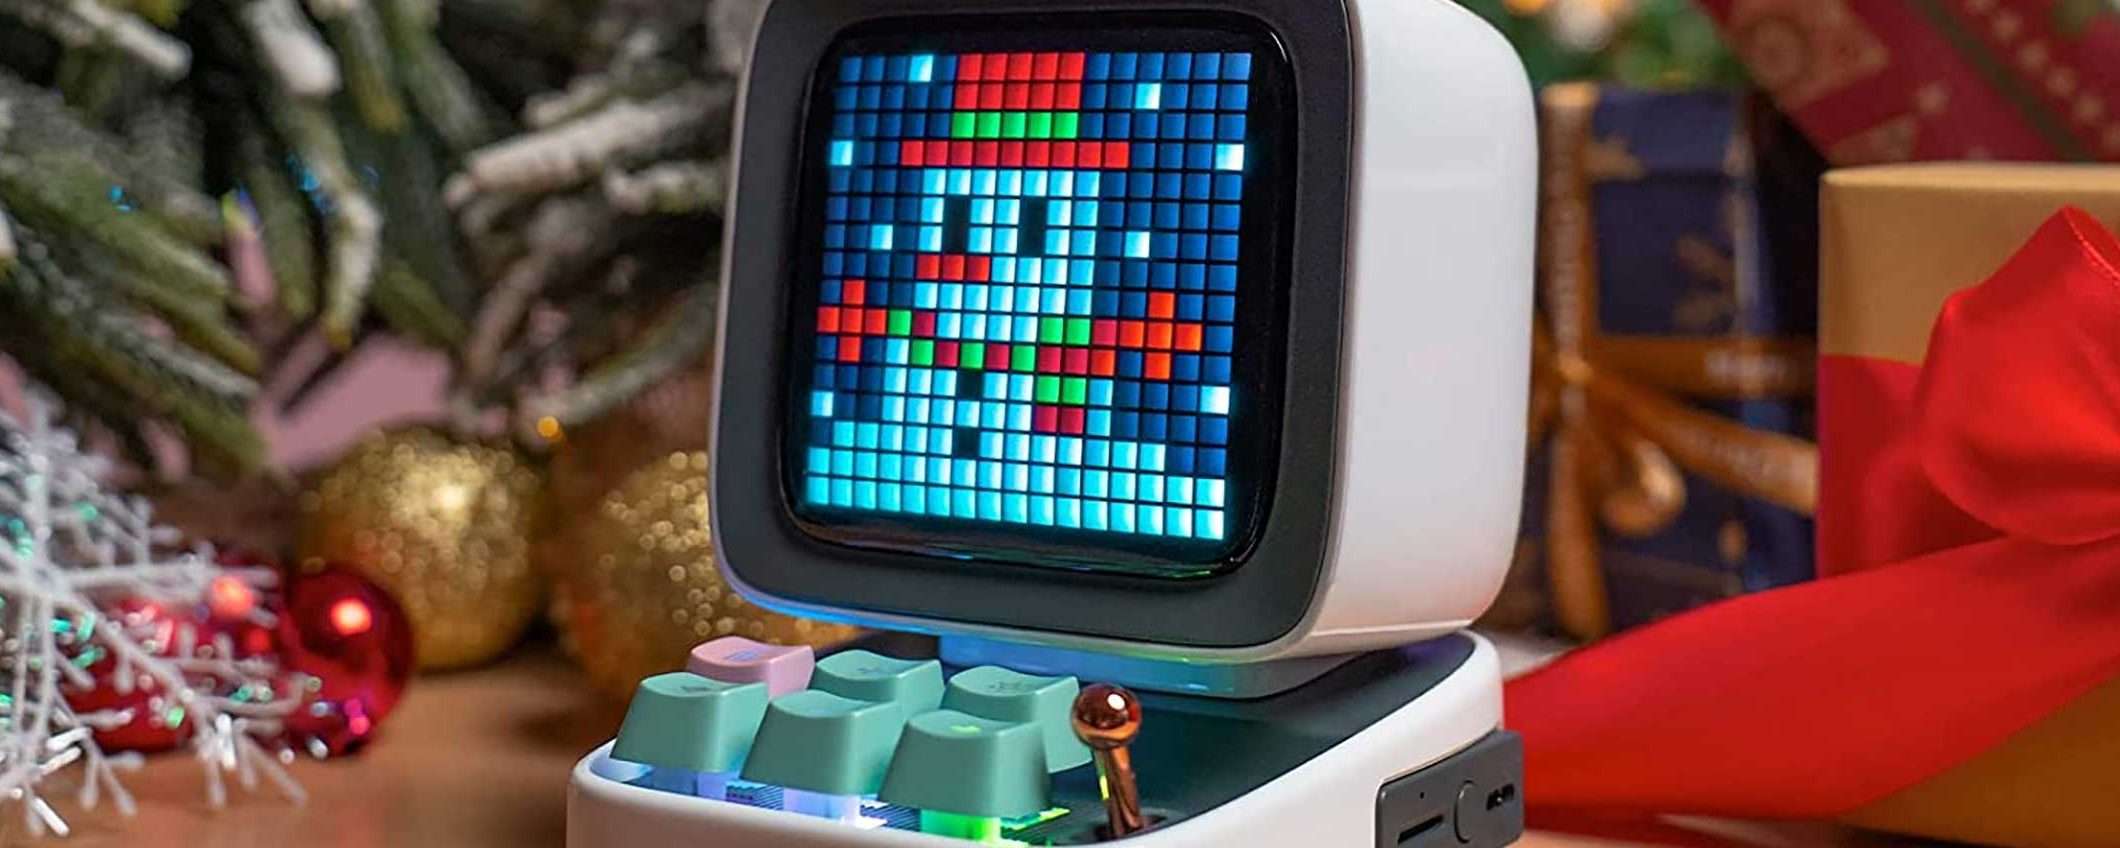 Speaker BT con display Pixel Art e Tetris: -25%